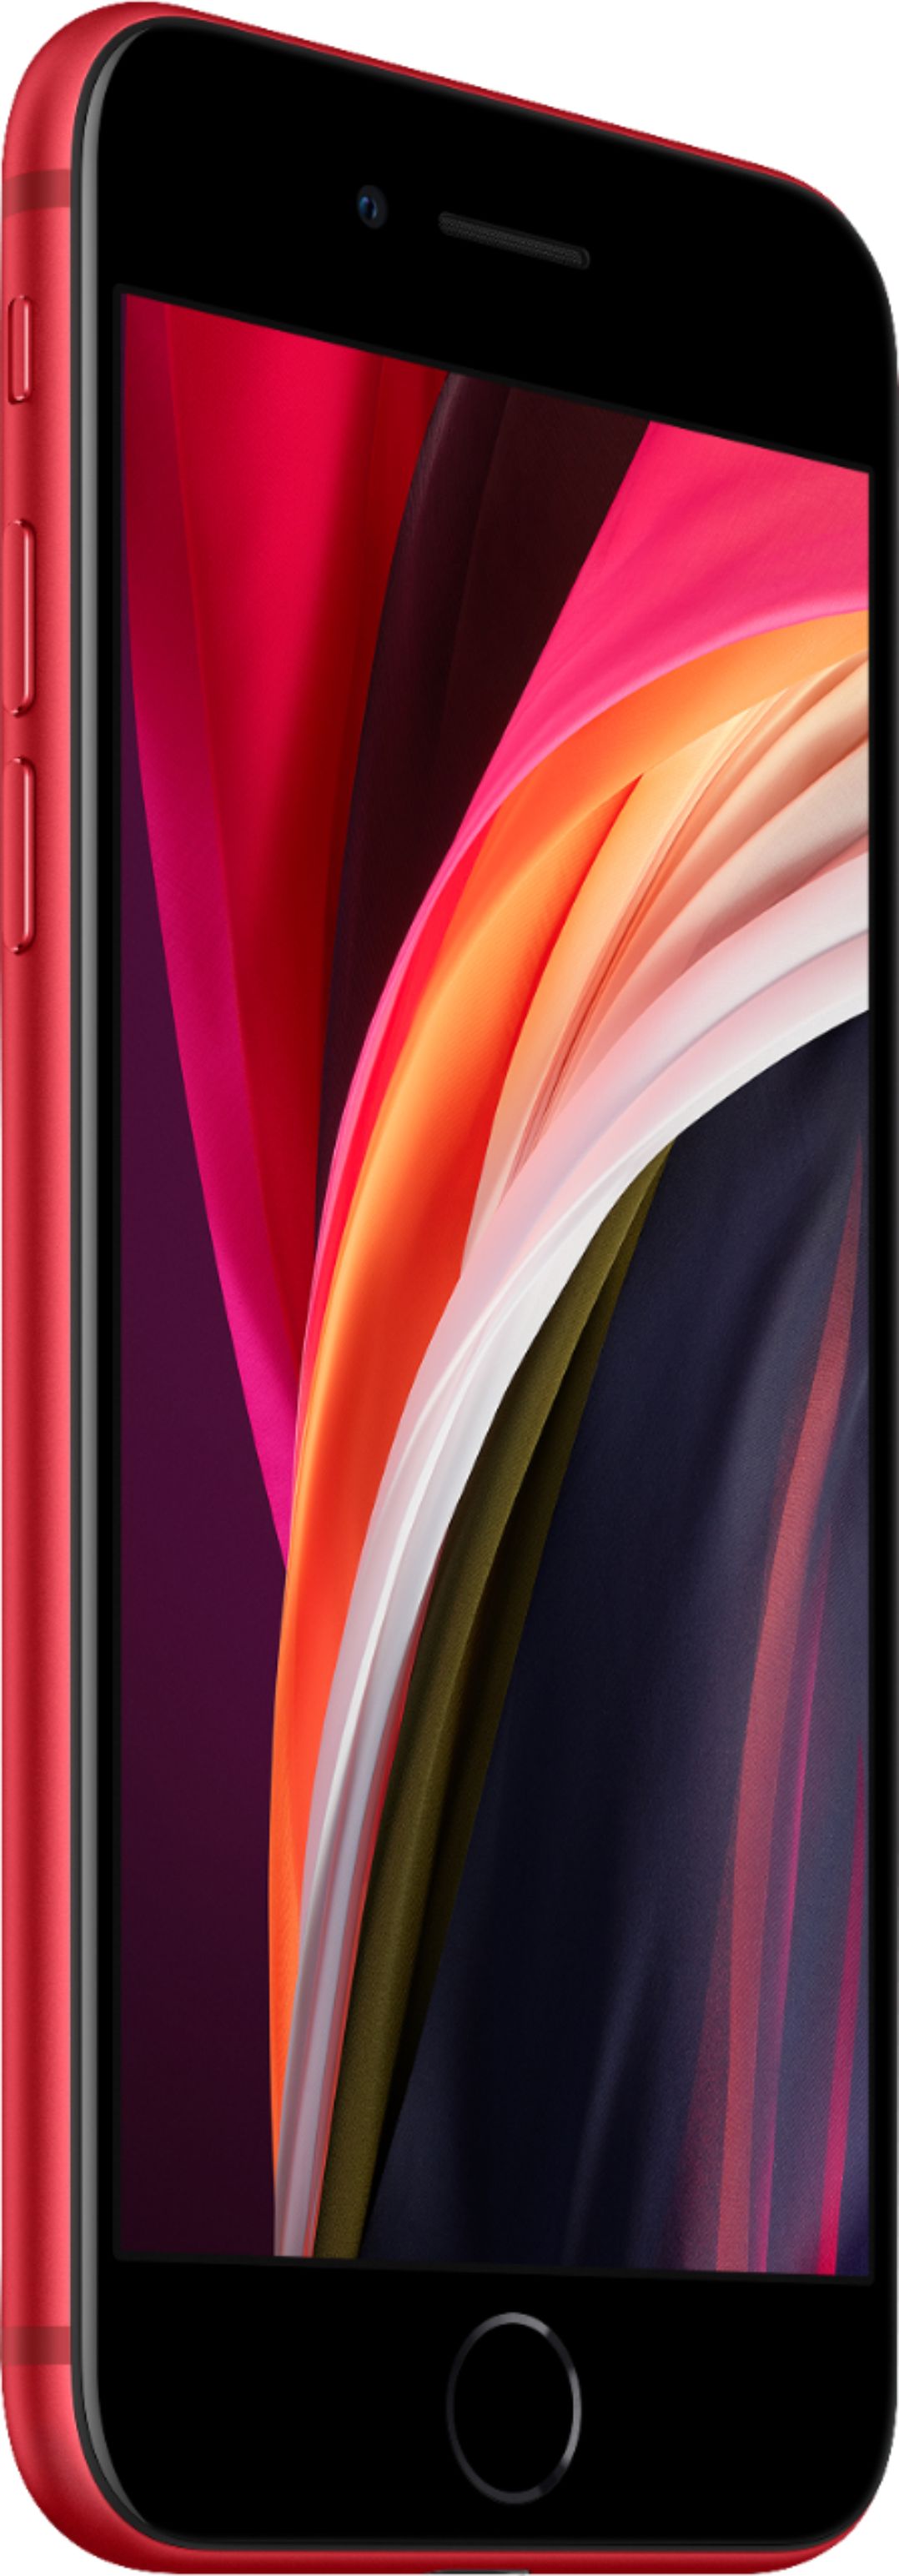 Apple iPhone SE (2nd Generation), 64GB, Red - Unlocked (Renewed)